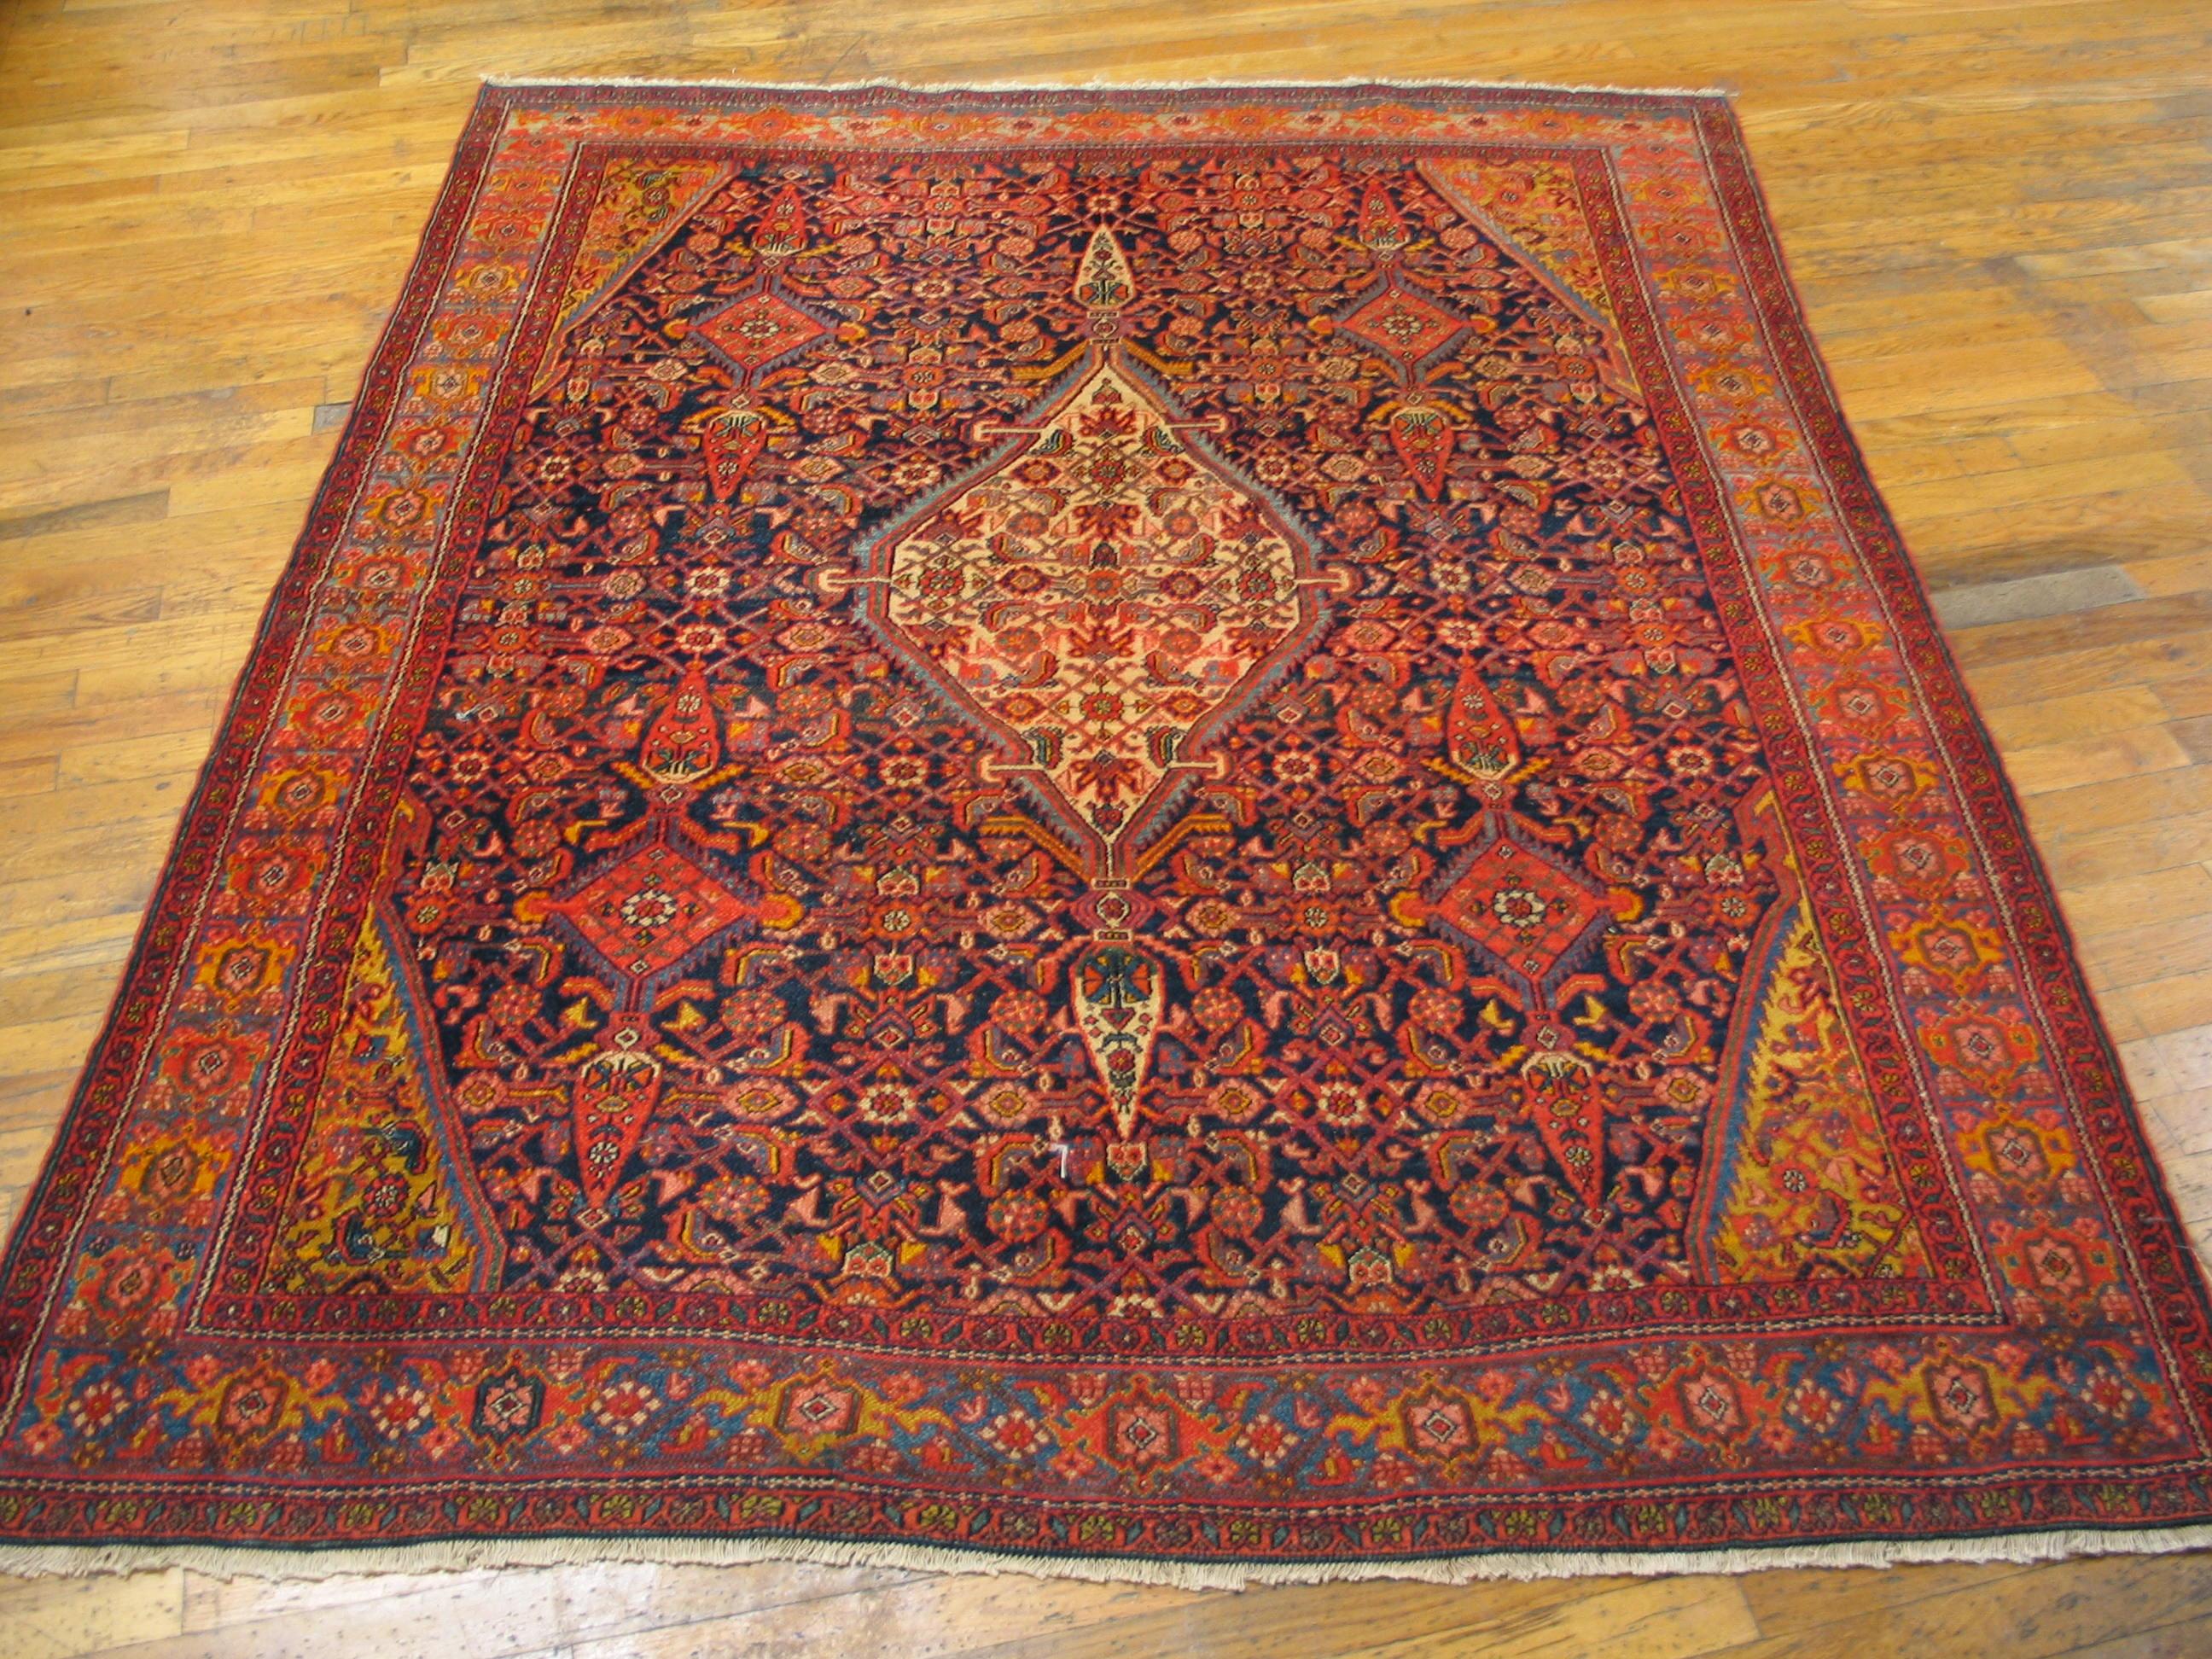 Antique Bibikabad rug, size: 5'6